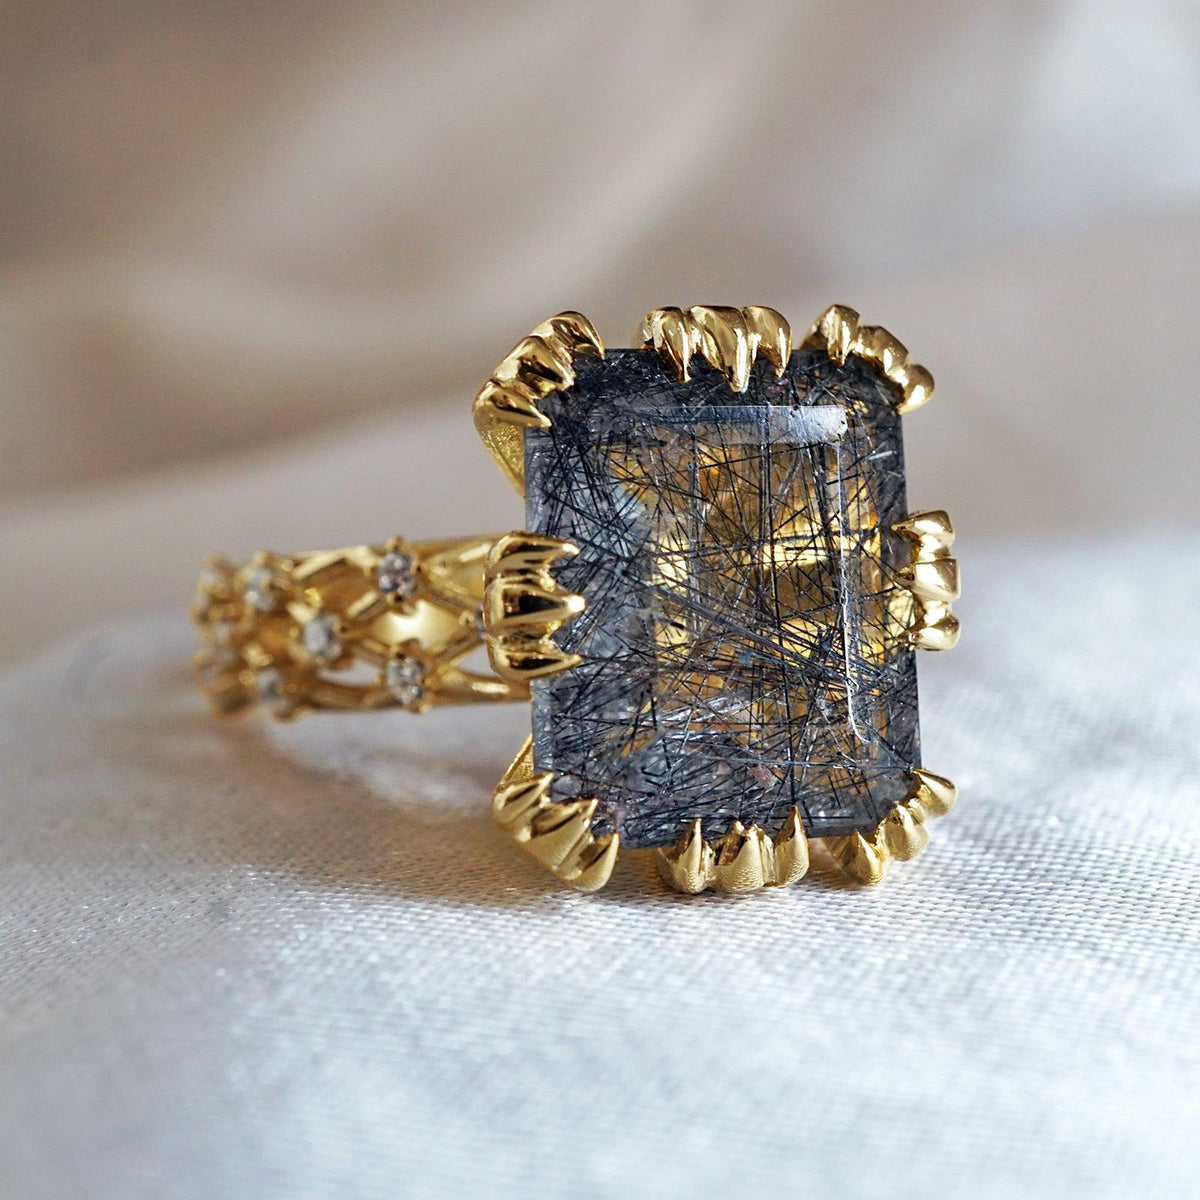 Empress Rutilated Quartz Diamond Ring in 14K and 18K Gold